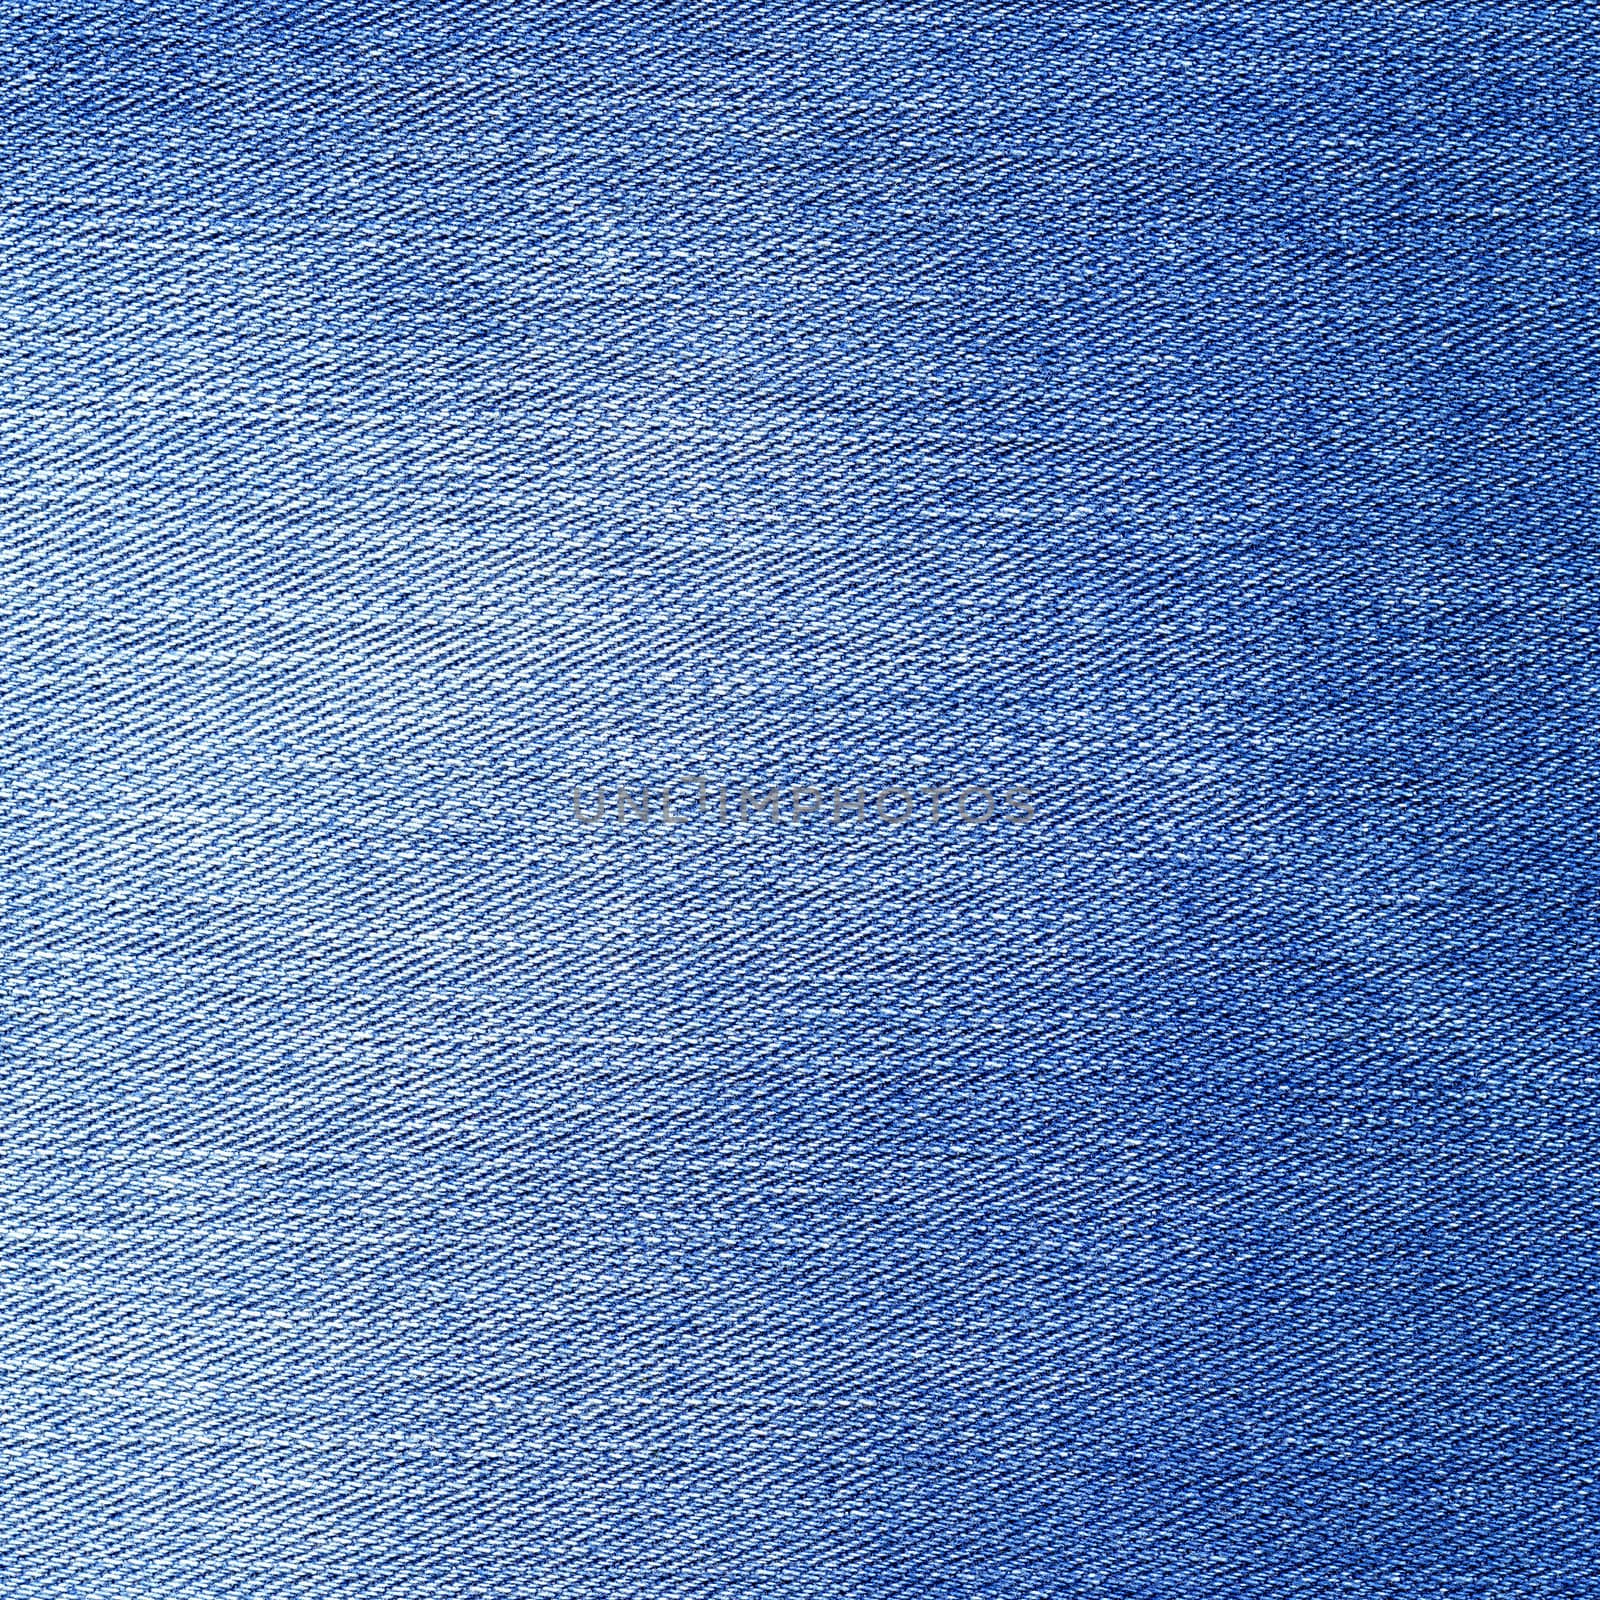 Denim texture. Light blue jeans background by ESSL